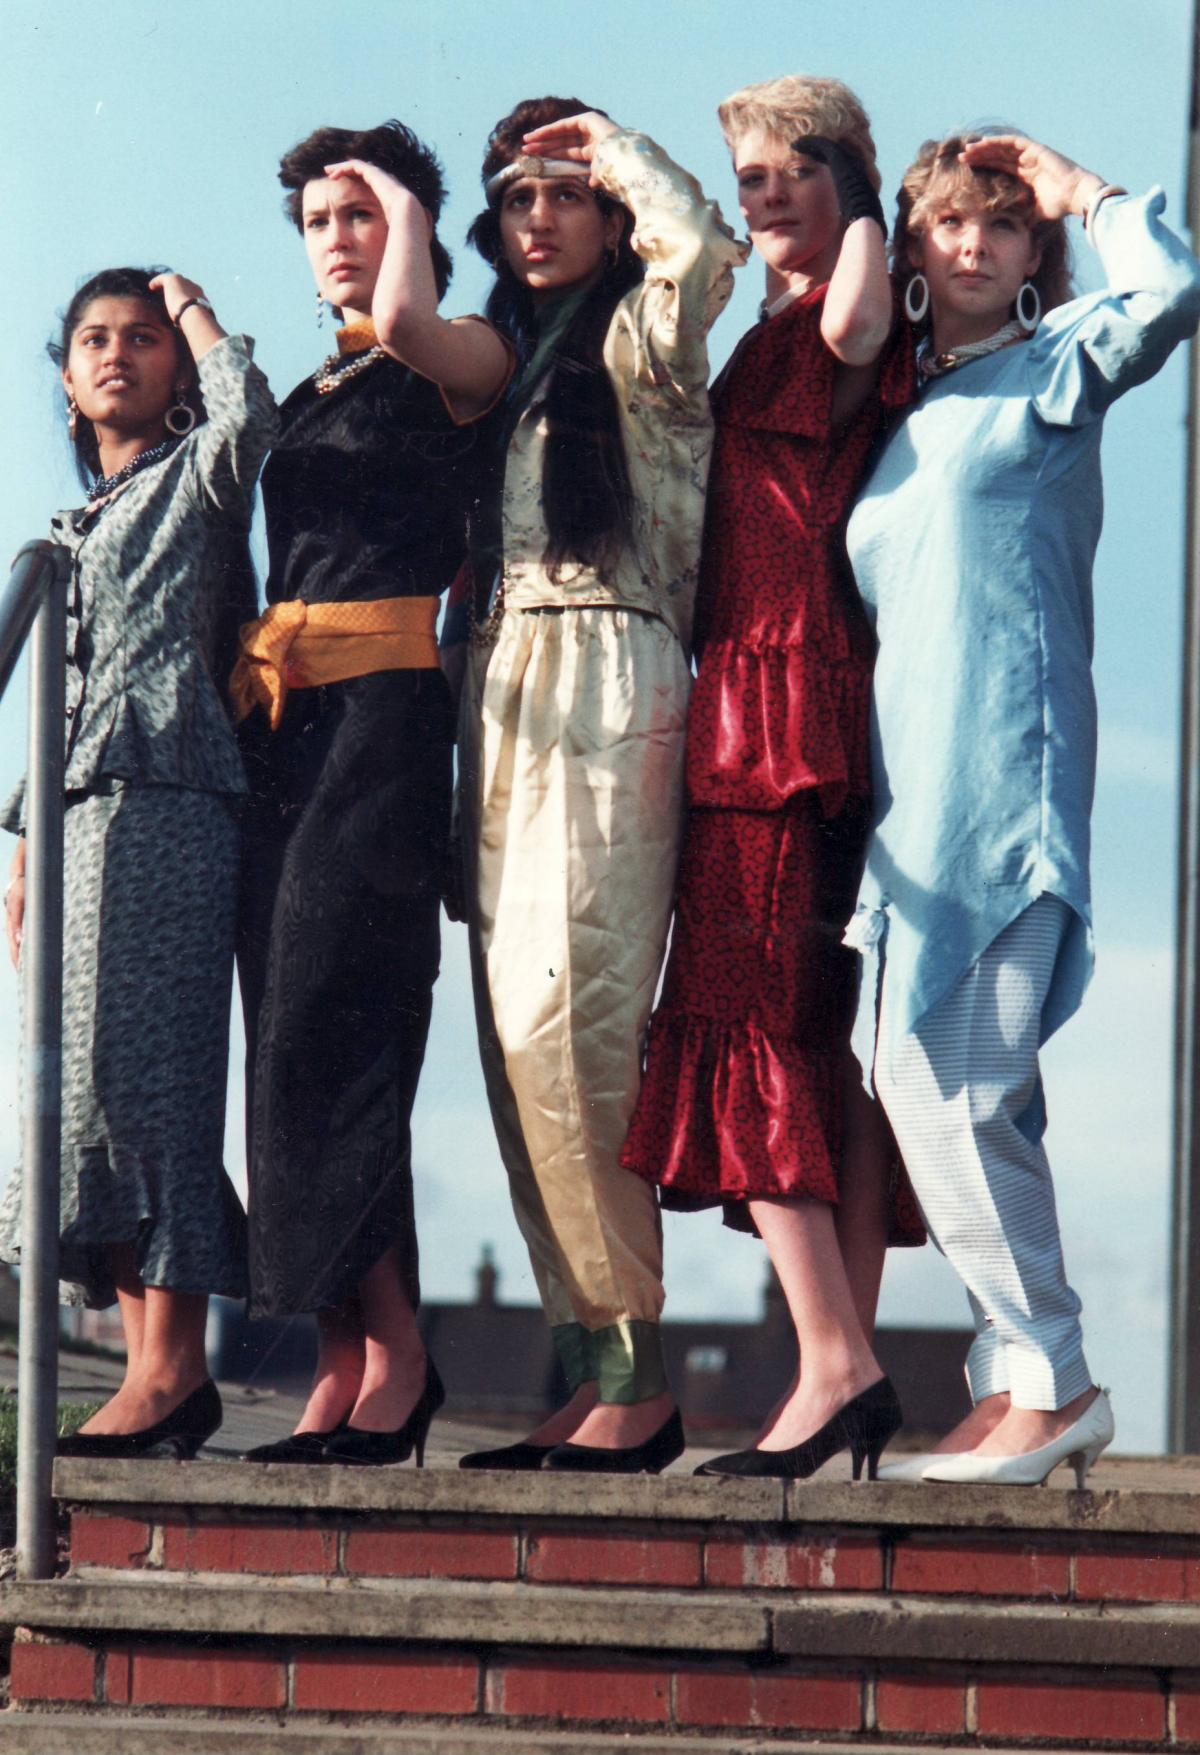 Fashion project at Grange school 1988.